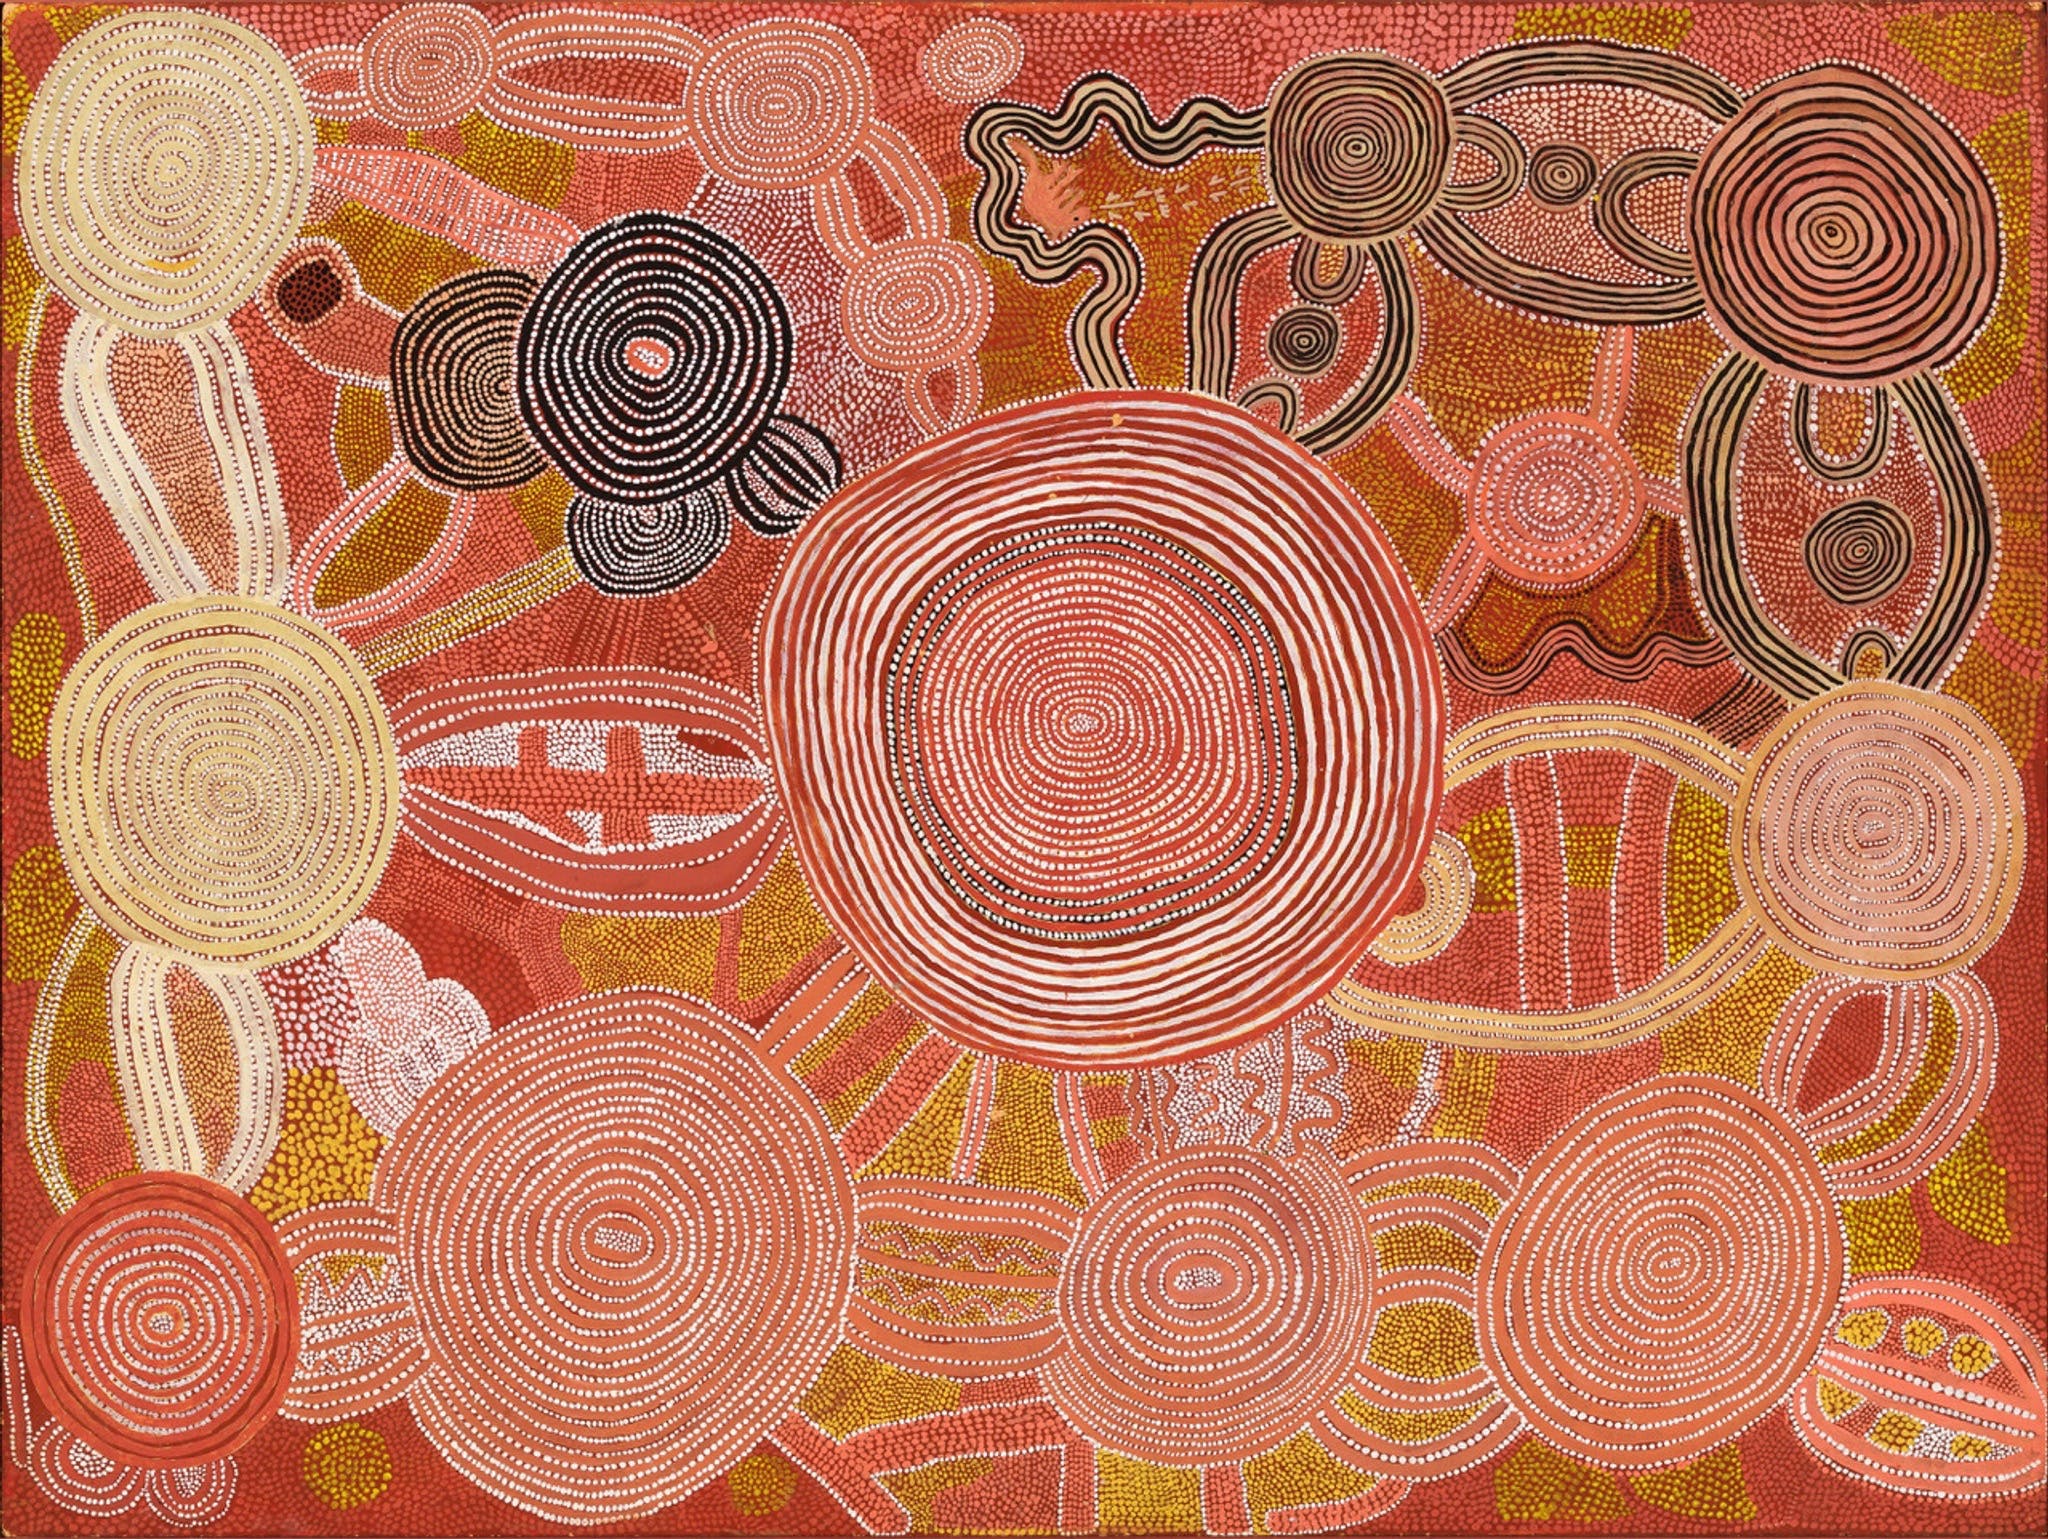 Reverence Exhibition of Australian Indigenous Art - Great Ocean Road Tourism